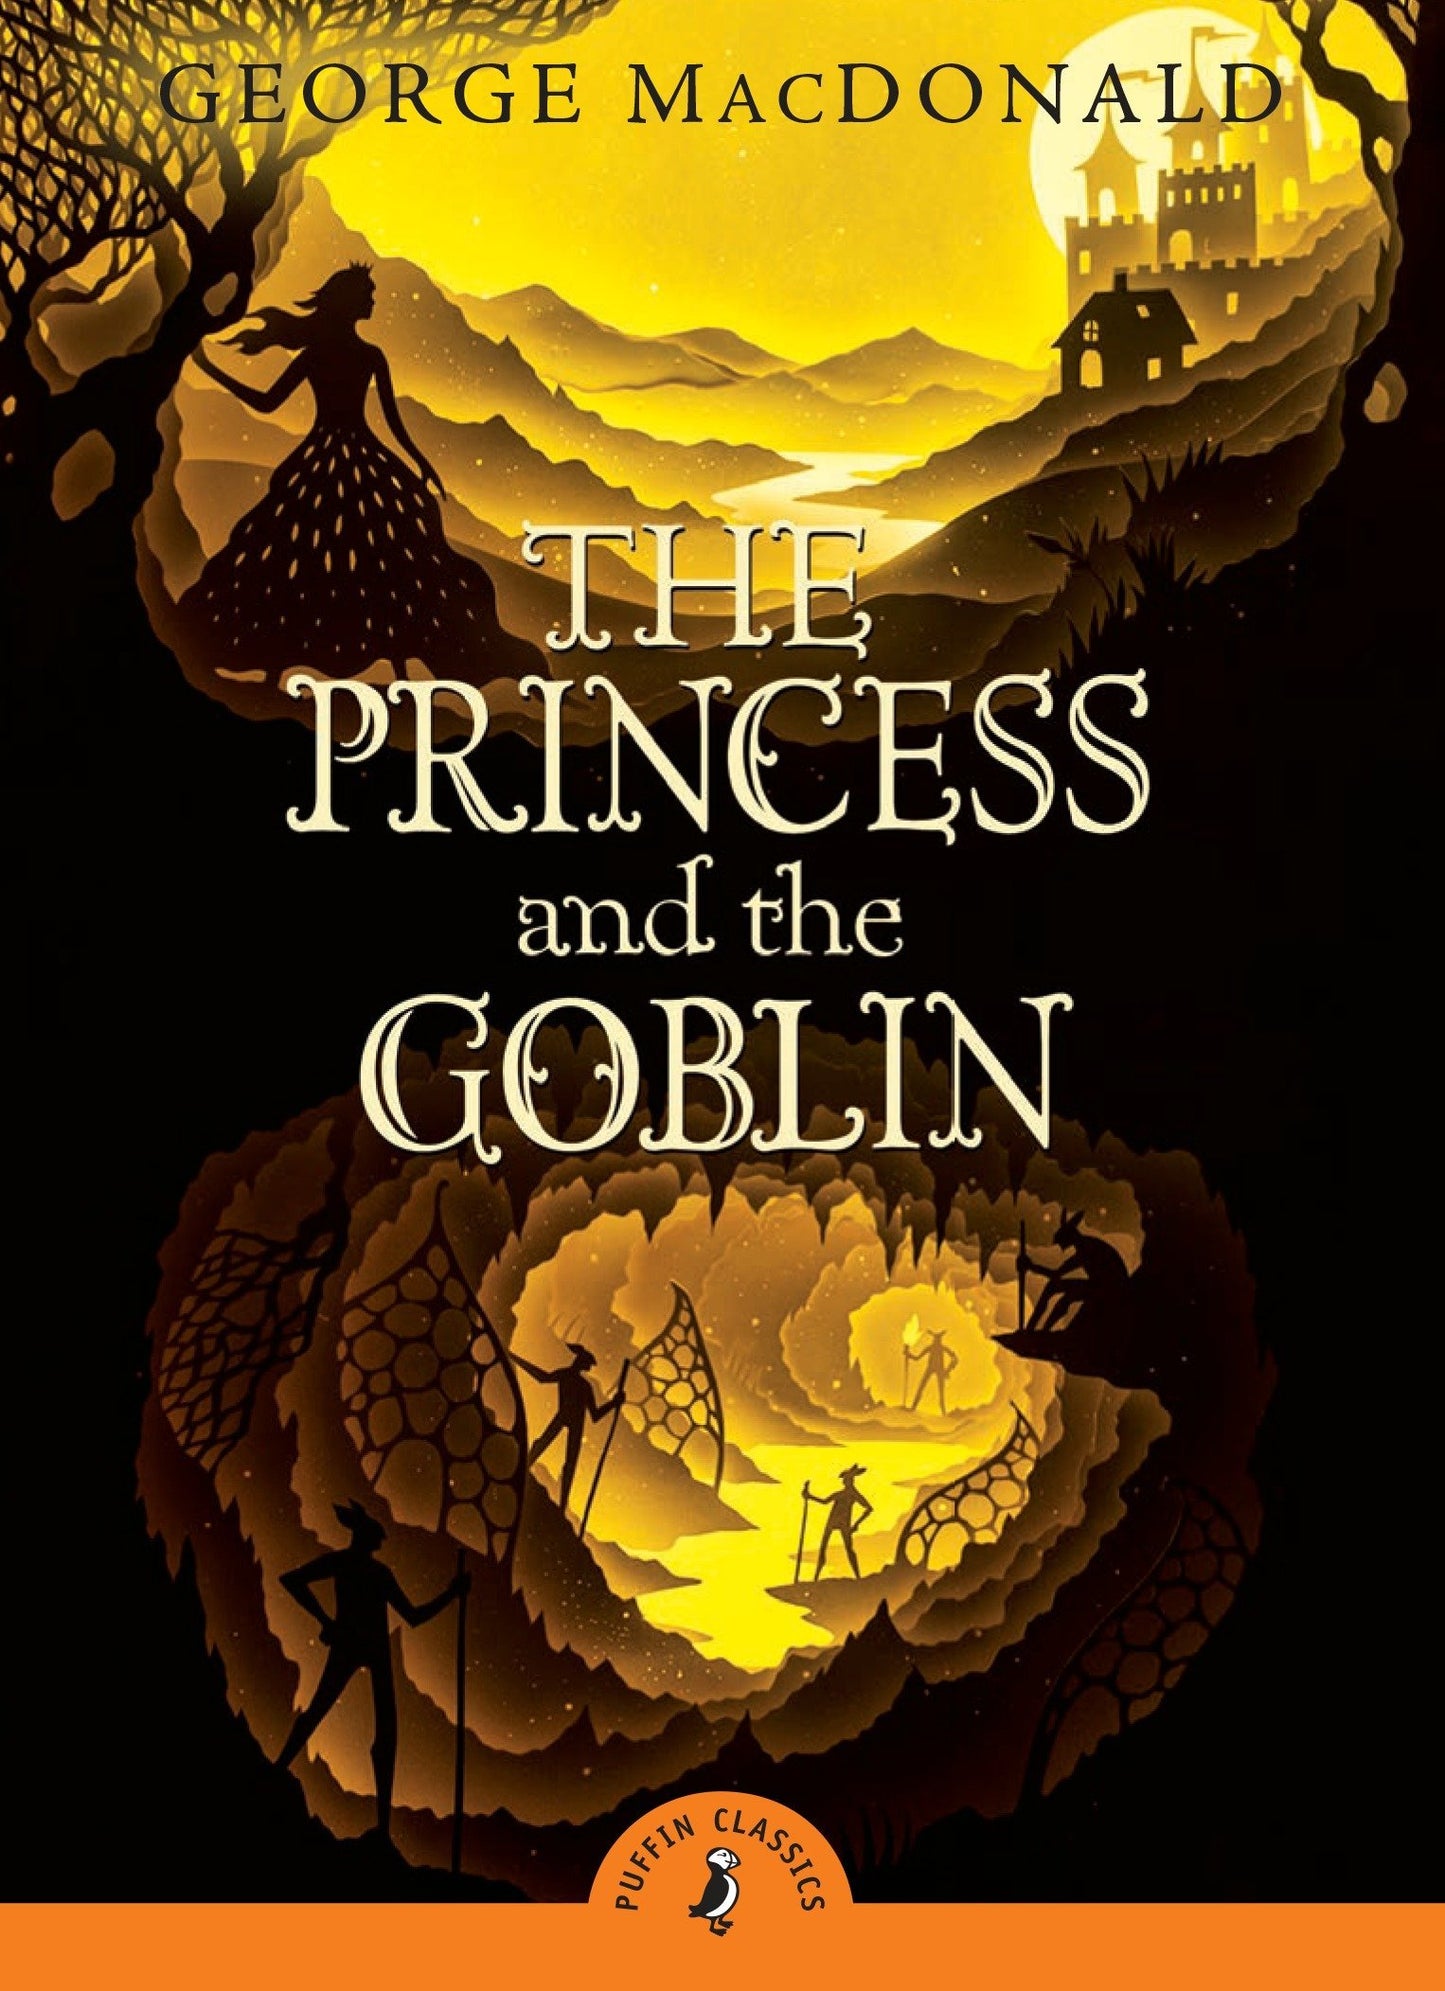 Princess and the Goblin (MacDonald - Puffin paperback)